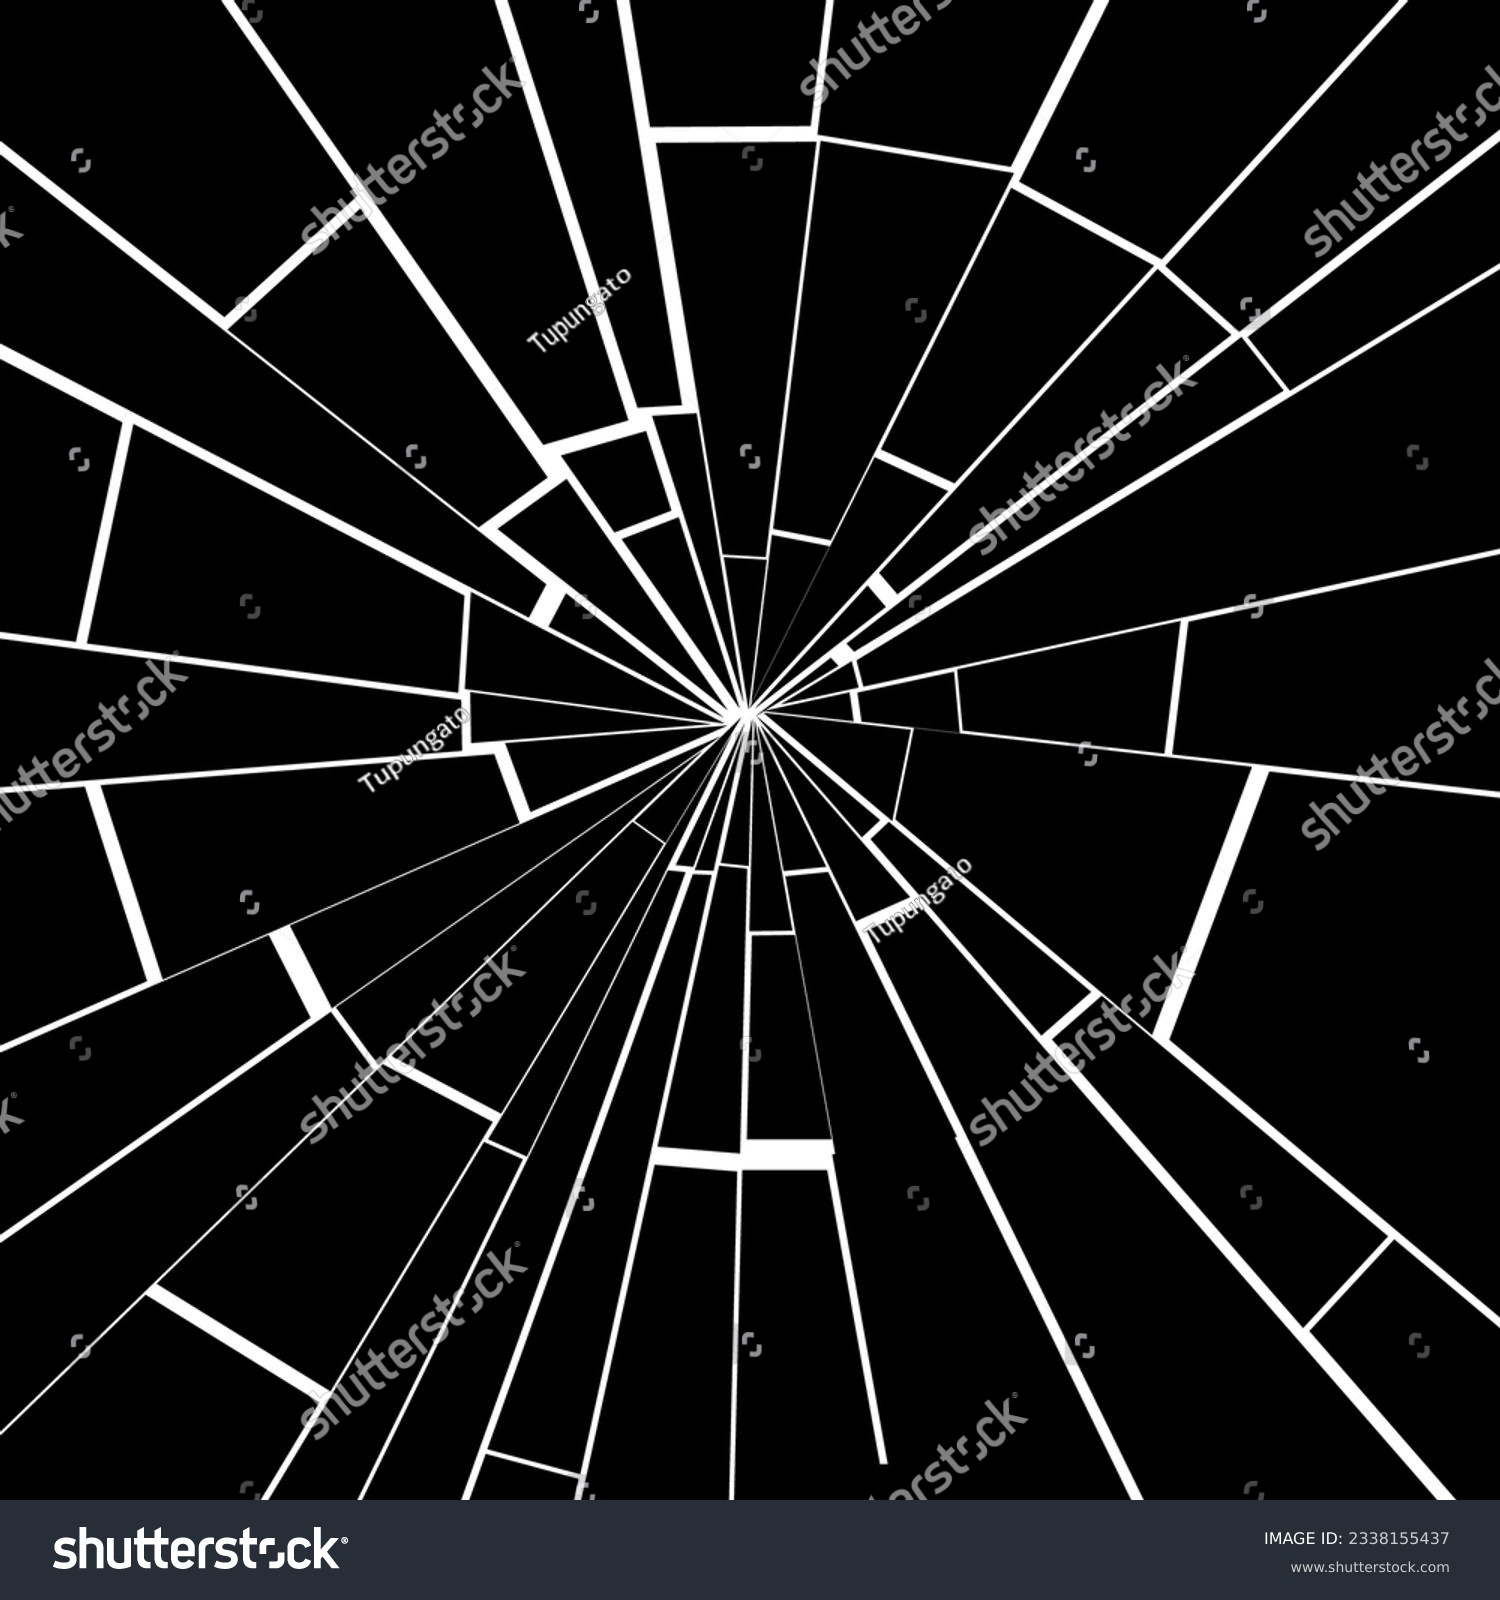 SVG of Fractured glass vector background. Black white cracked screen broken glass shards. svg